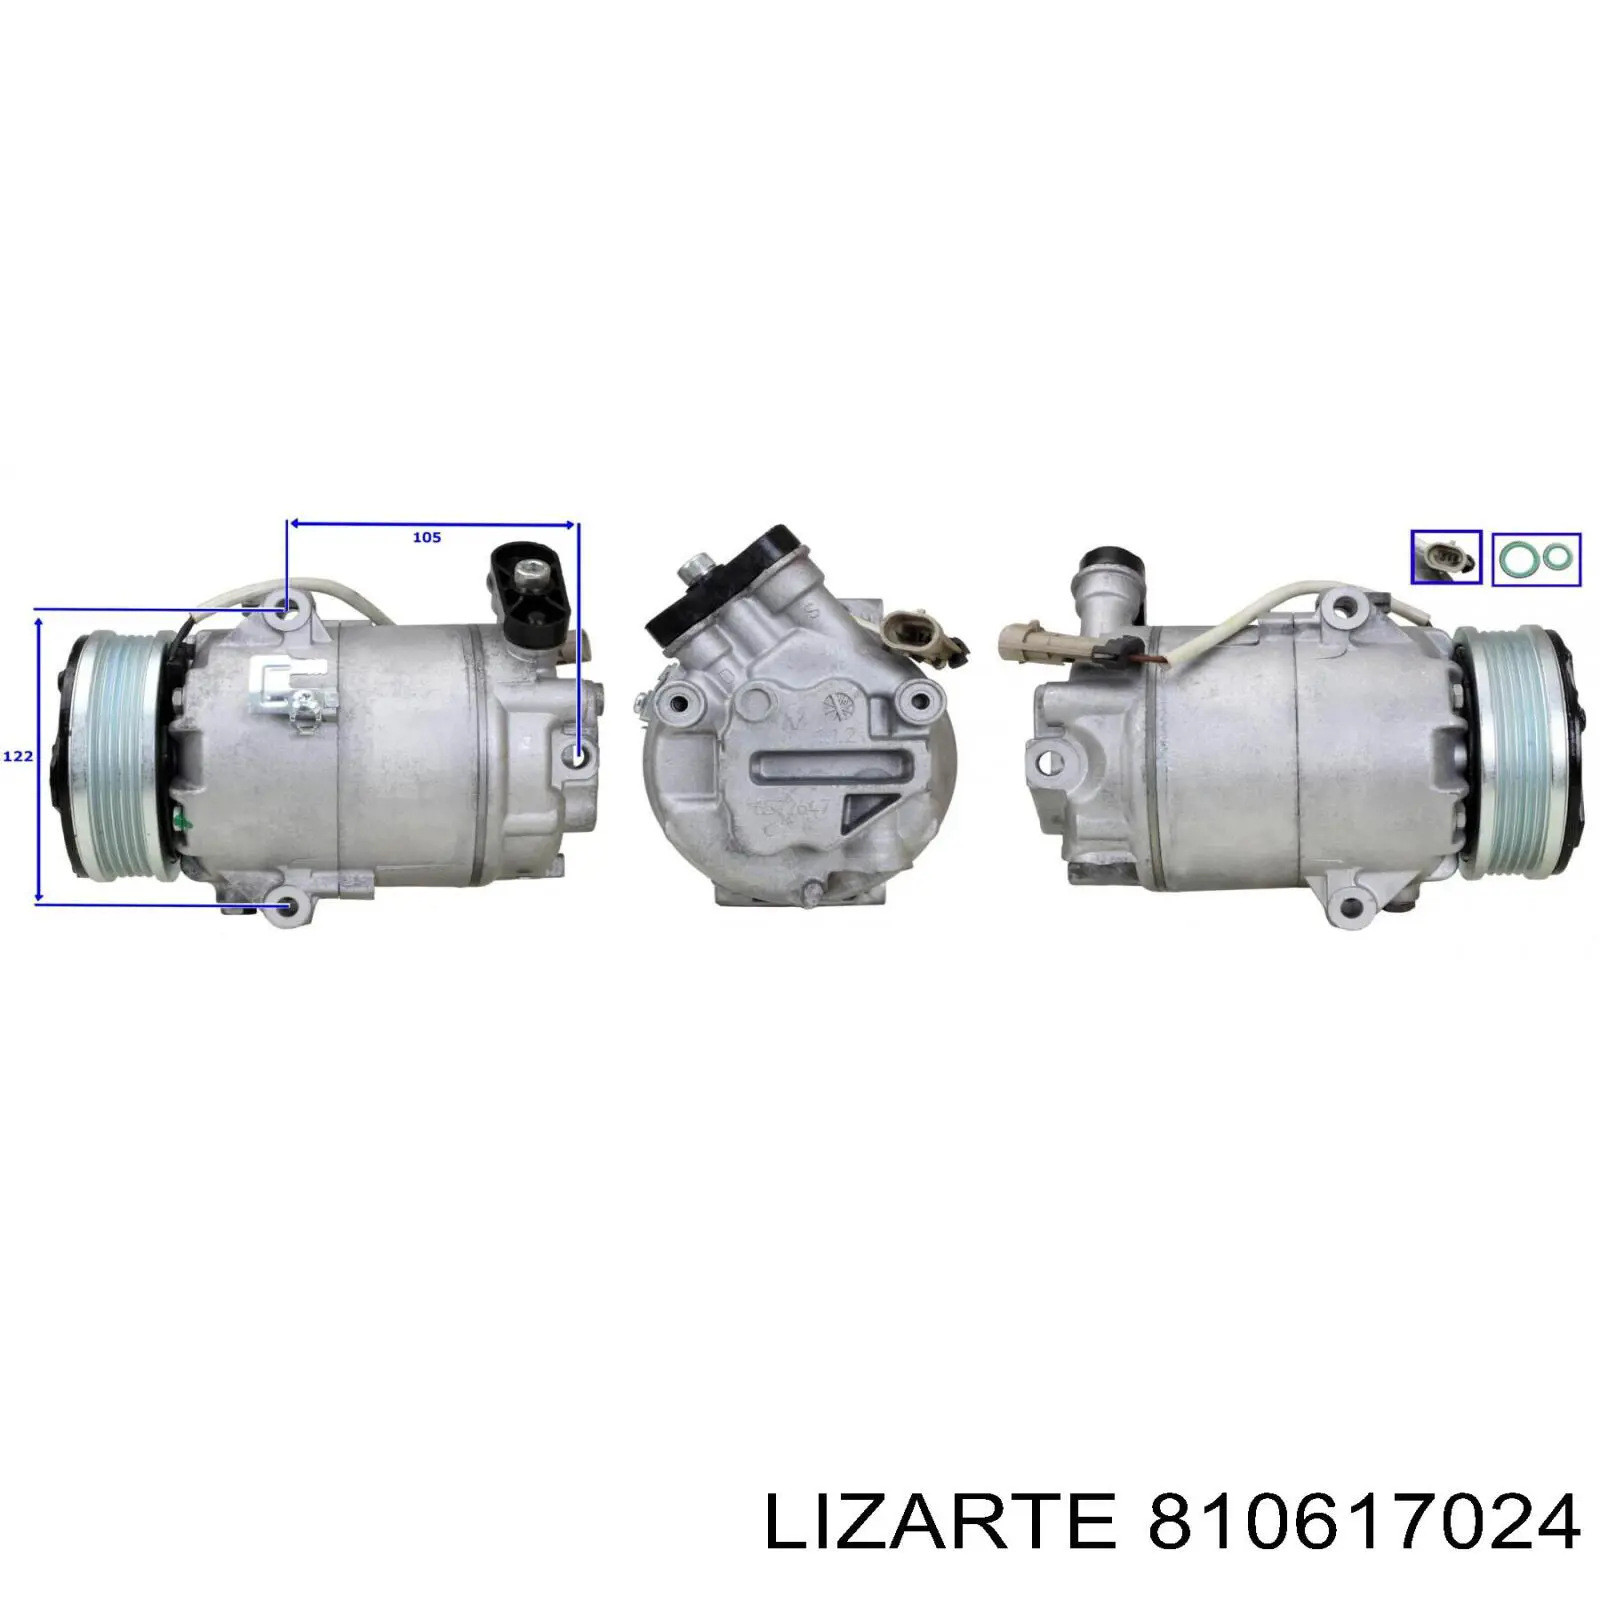 Compresor de aire acondicionado 810617024 Lizarte